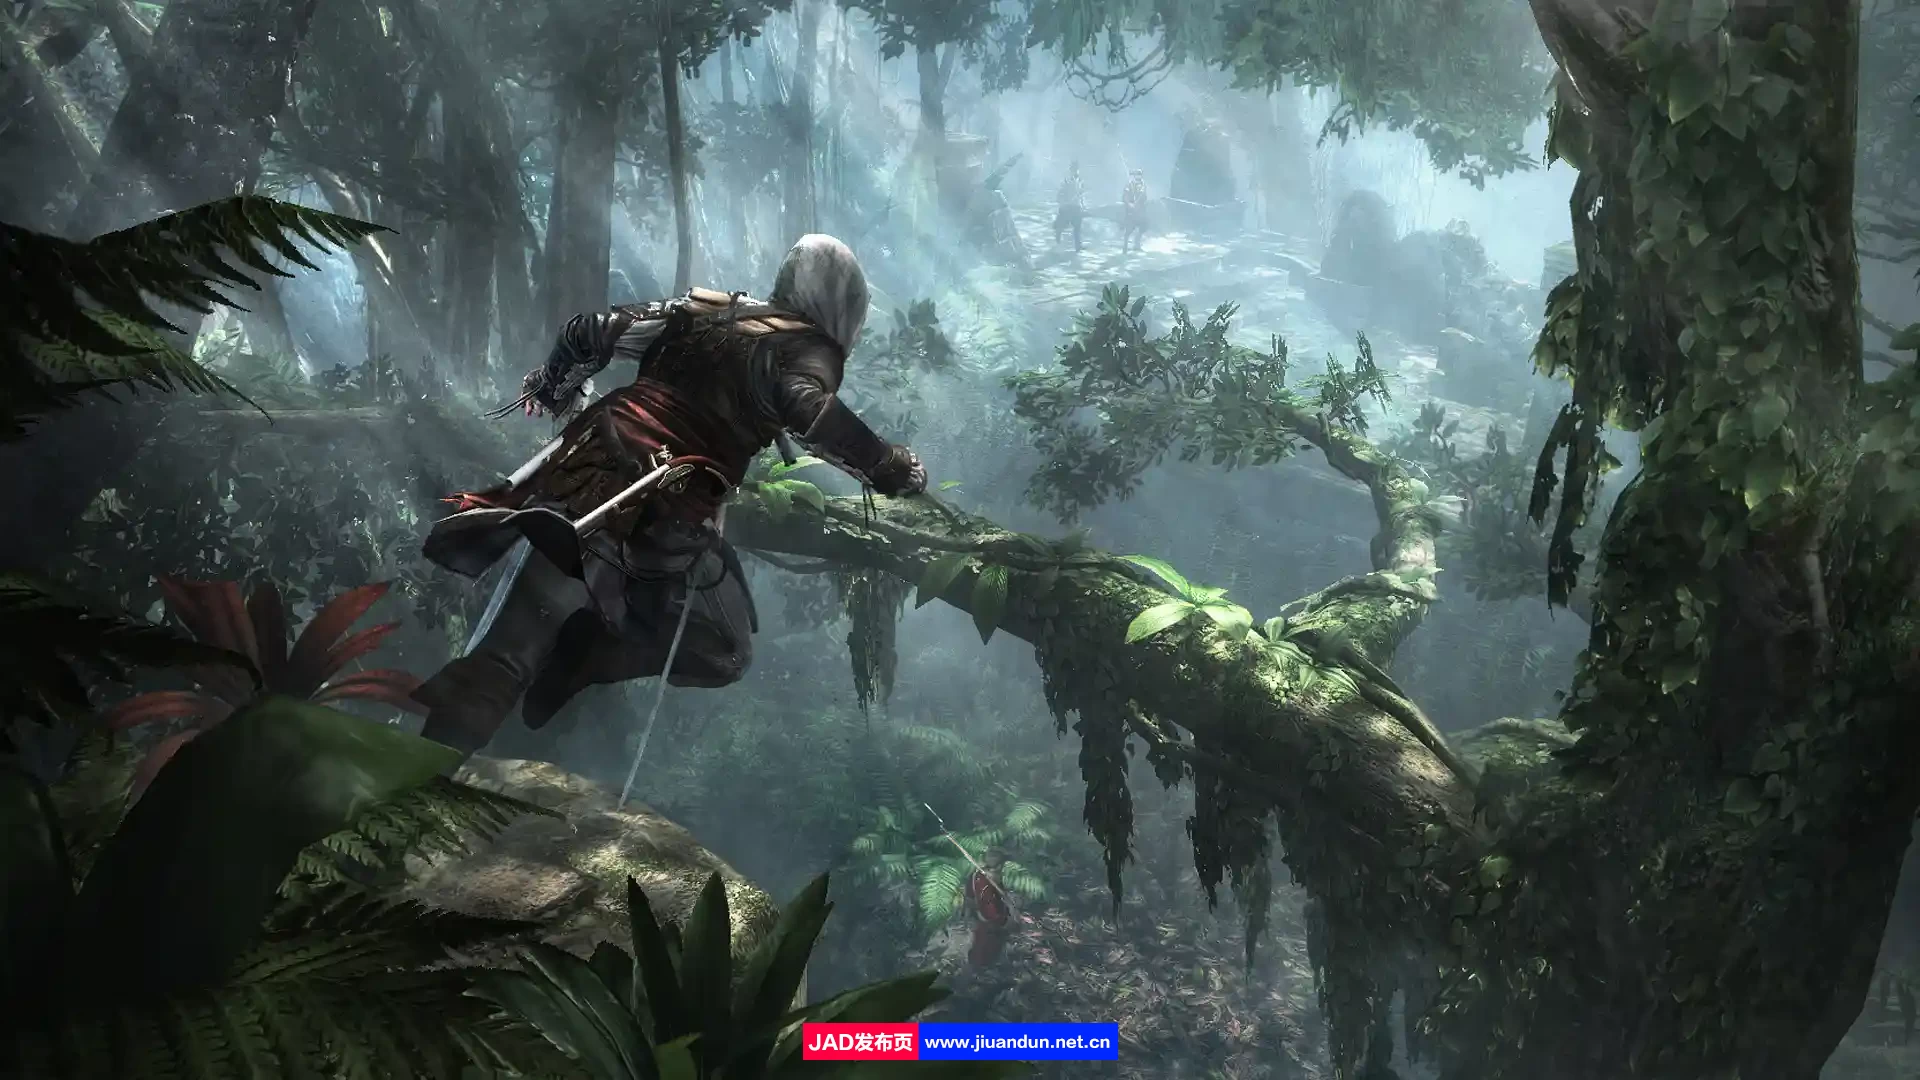 刺客信条IV:黑旗Assassin's Creed IV: Black Flag[v 1.08+DLC]免安装简体中文版7月26日更新17.4GB 单机游戏 第6张